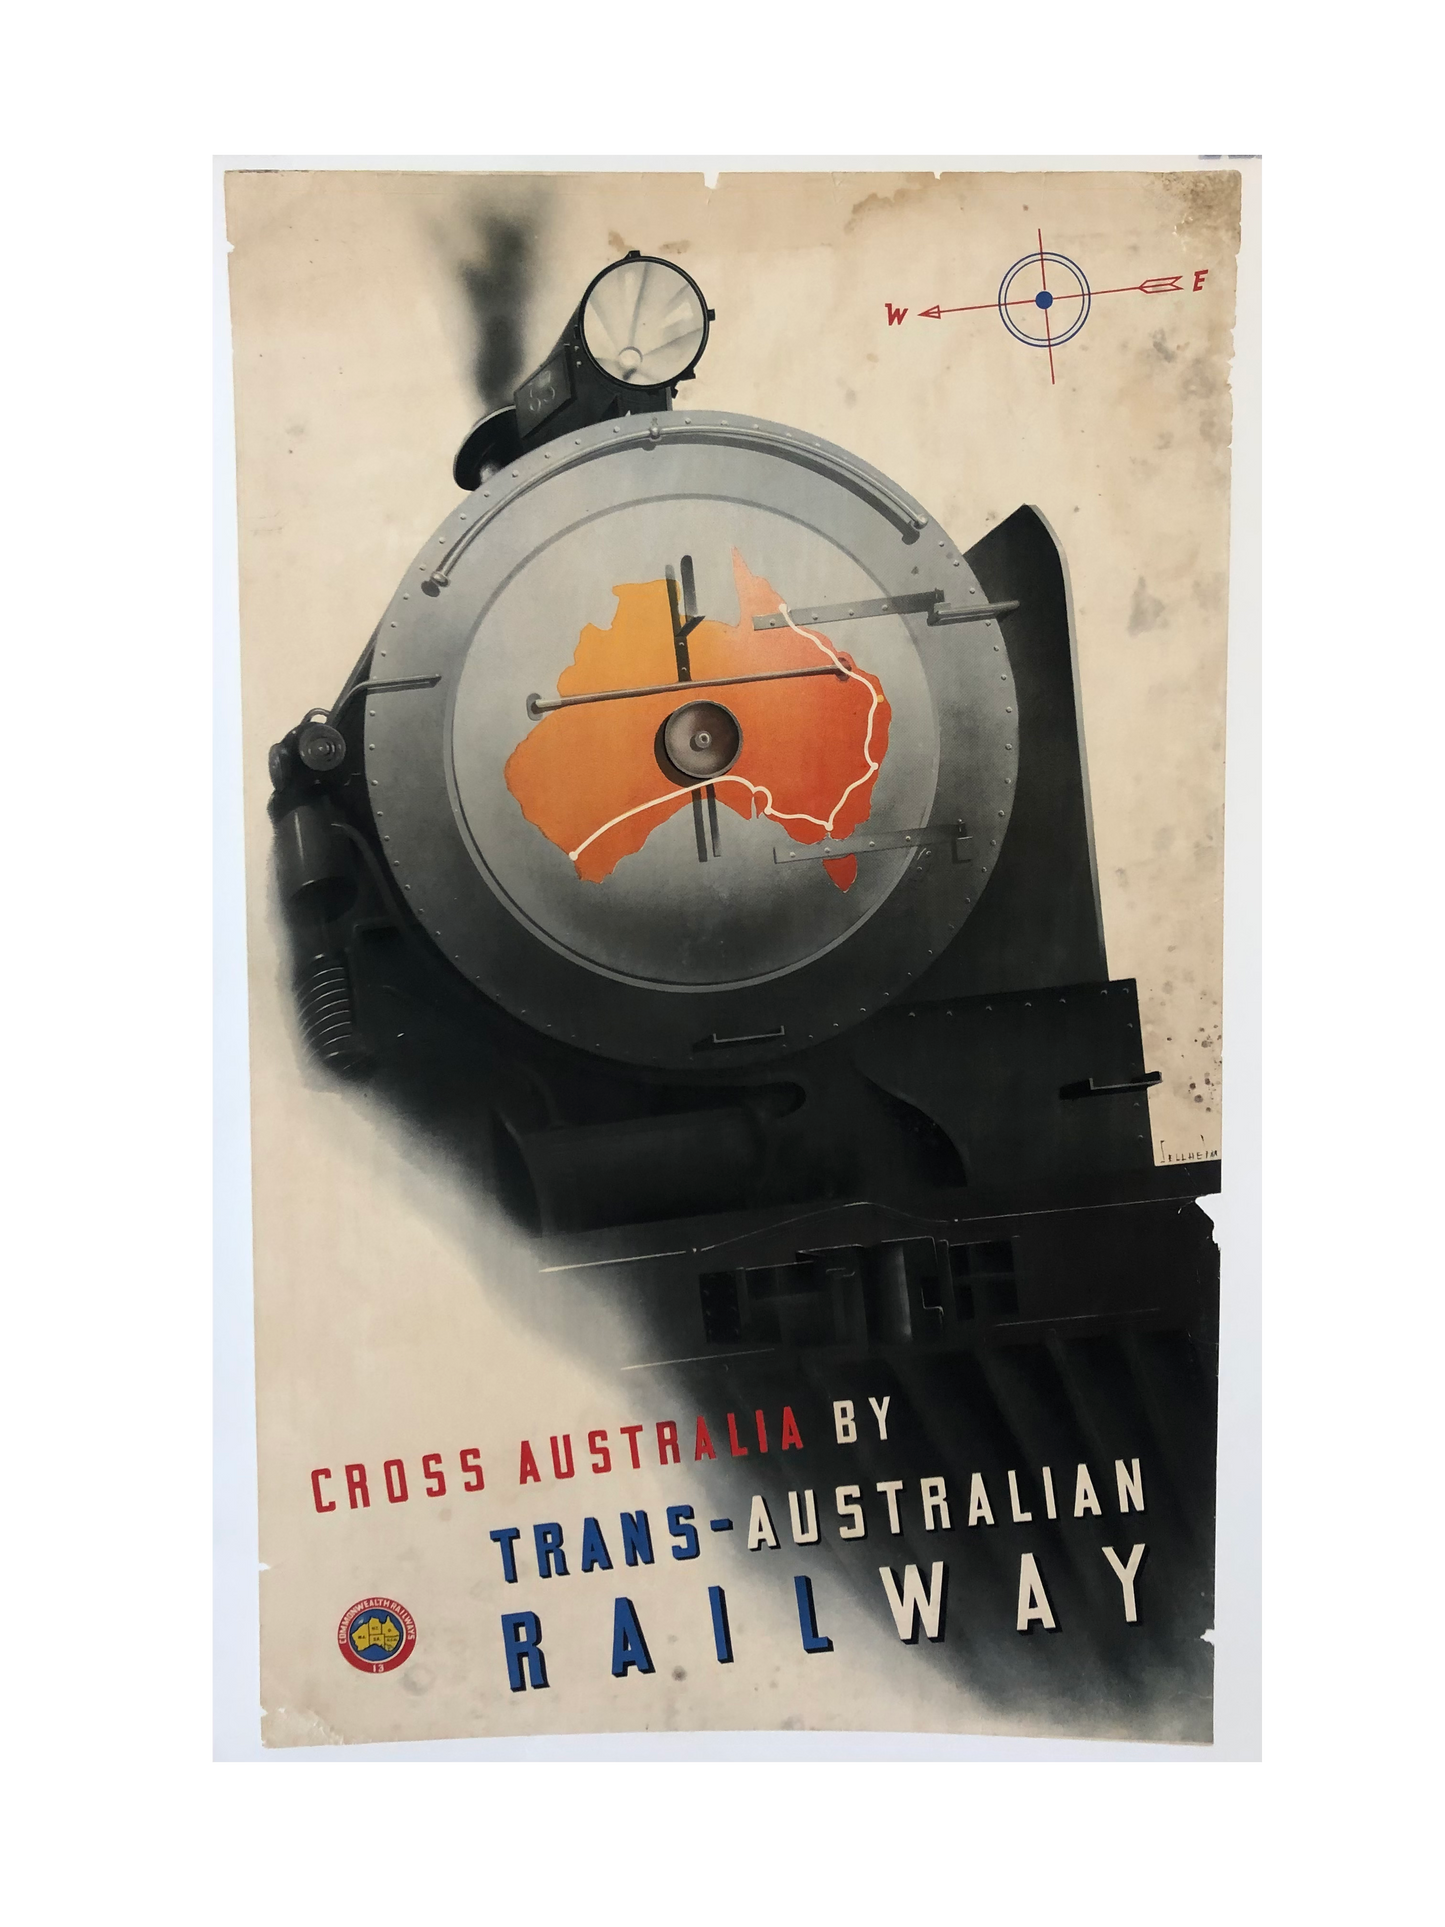 "Cross Australia by Trans-Australian Railway" Advertisement by Gert Sellheim